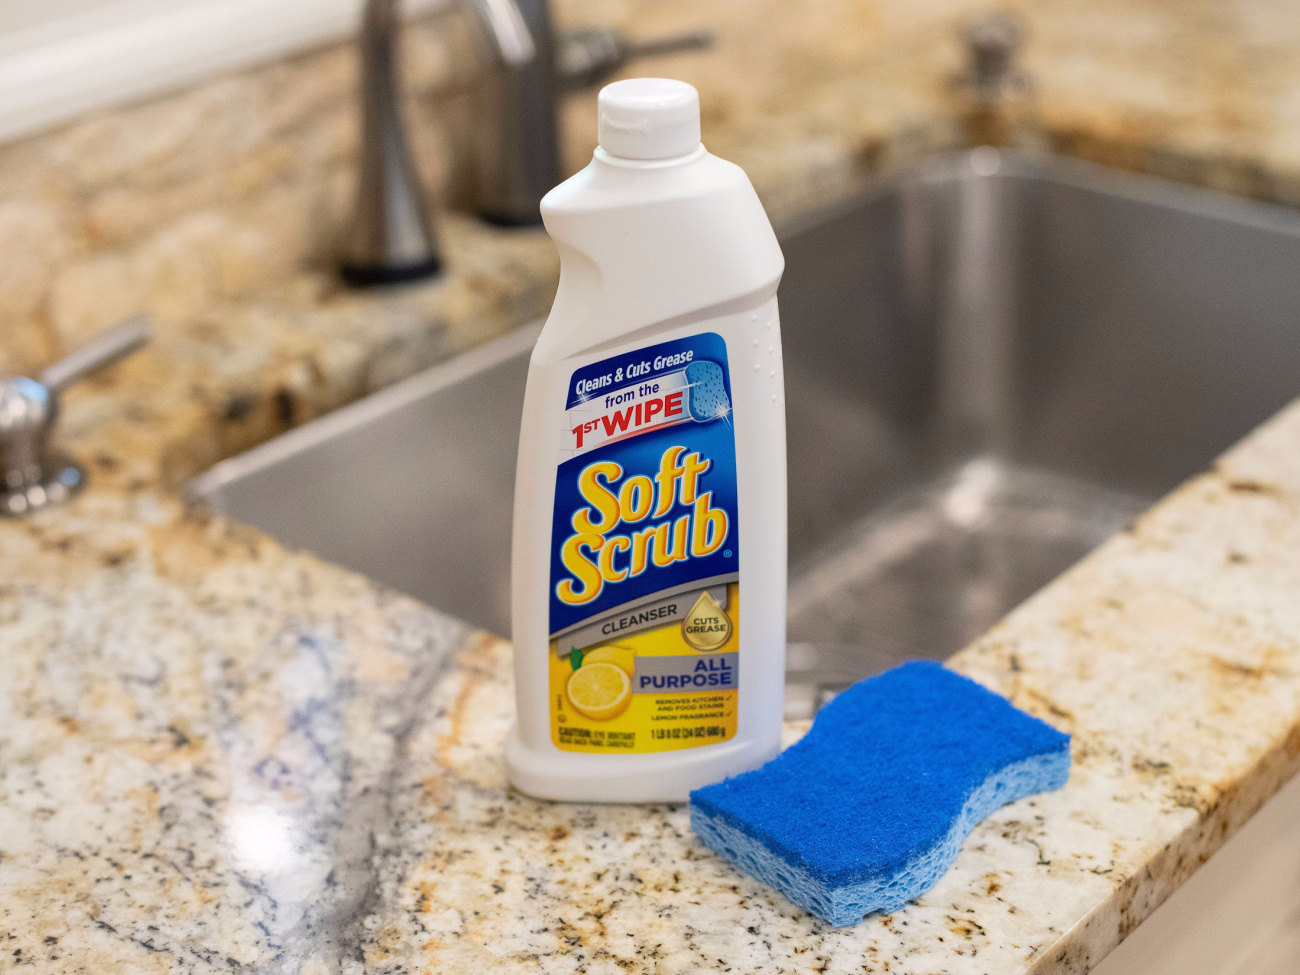 Soft Scrub Cleanser Just $3.49 At Publix